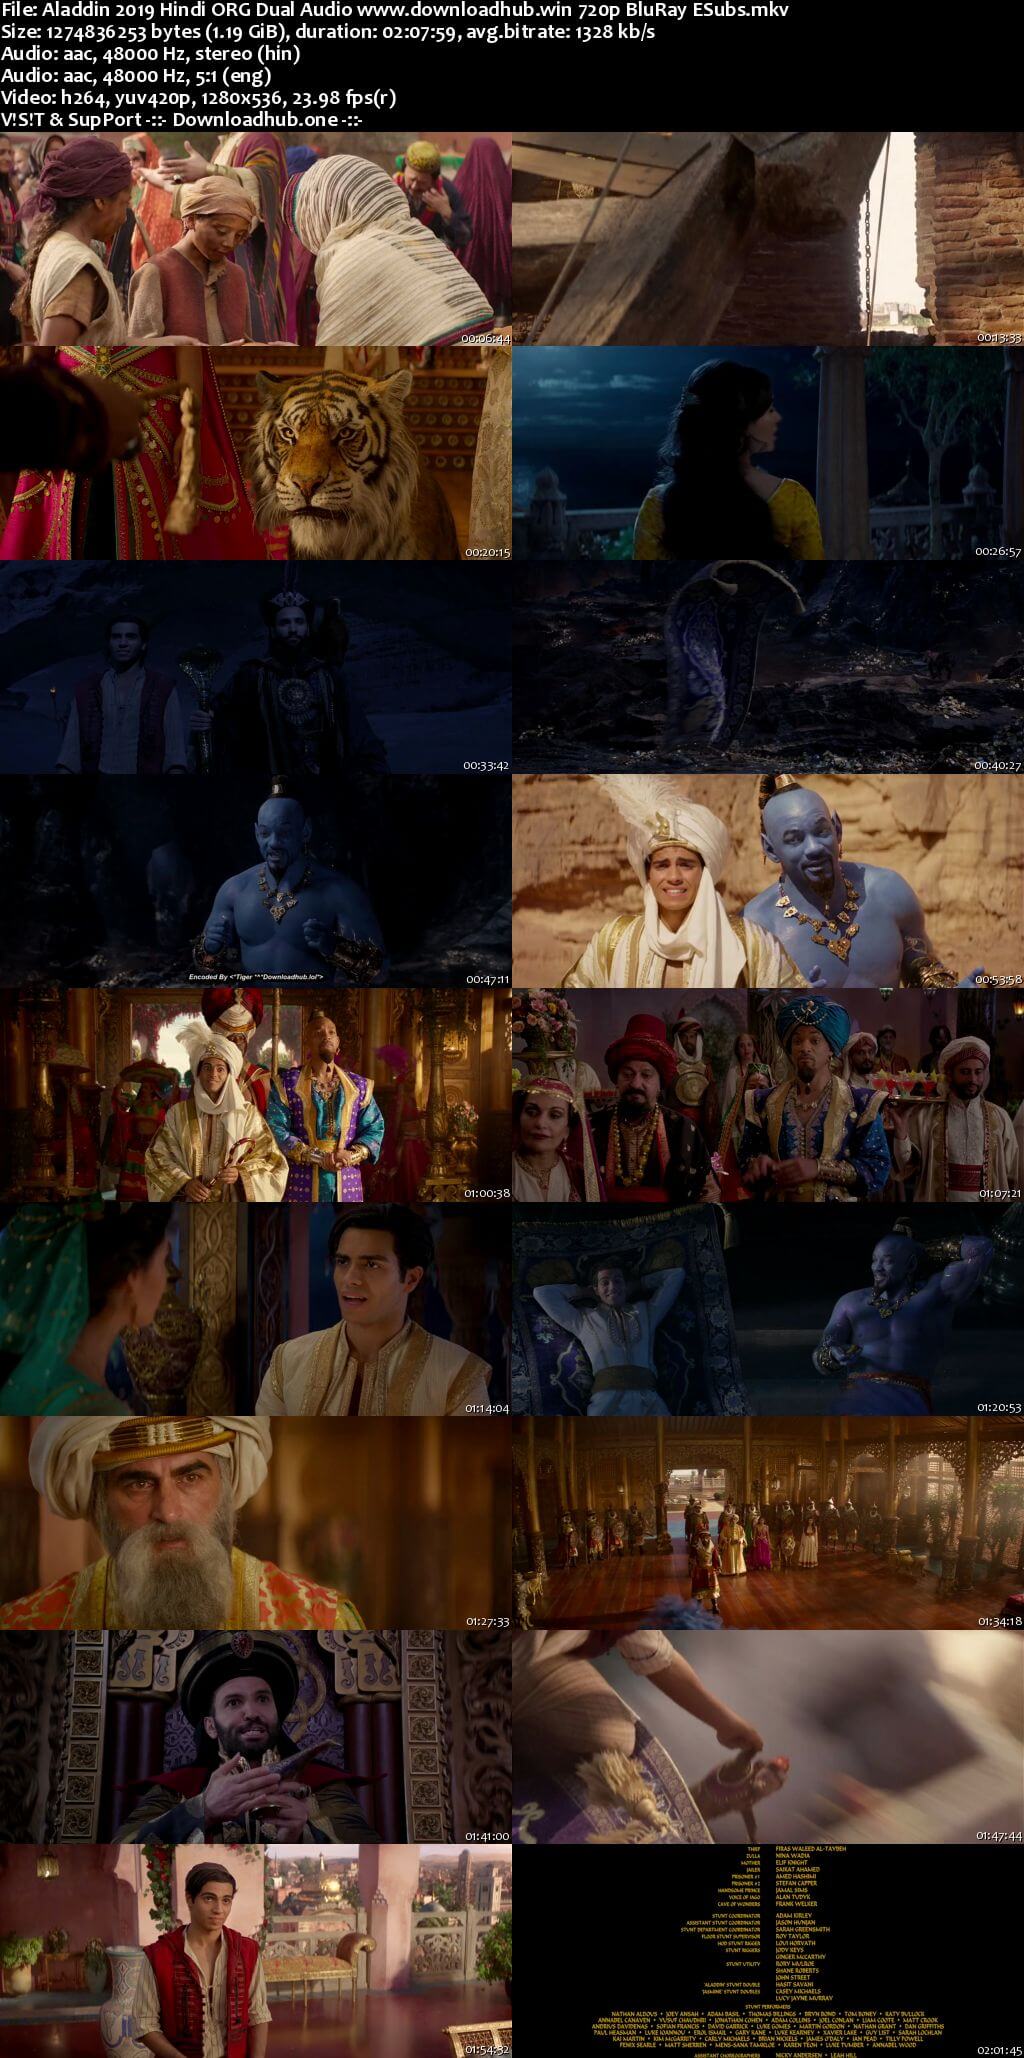 Aladdin 2019 Hindi ORG Dual Audio 720p BluRay ESubs